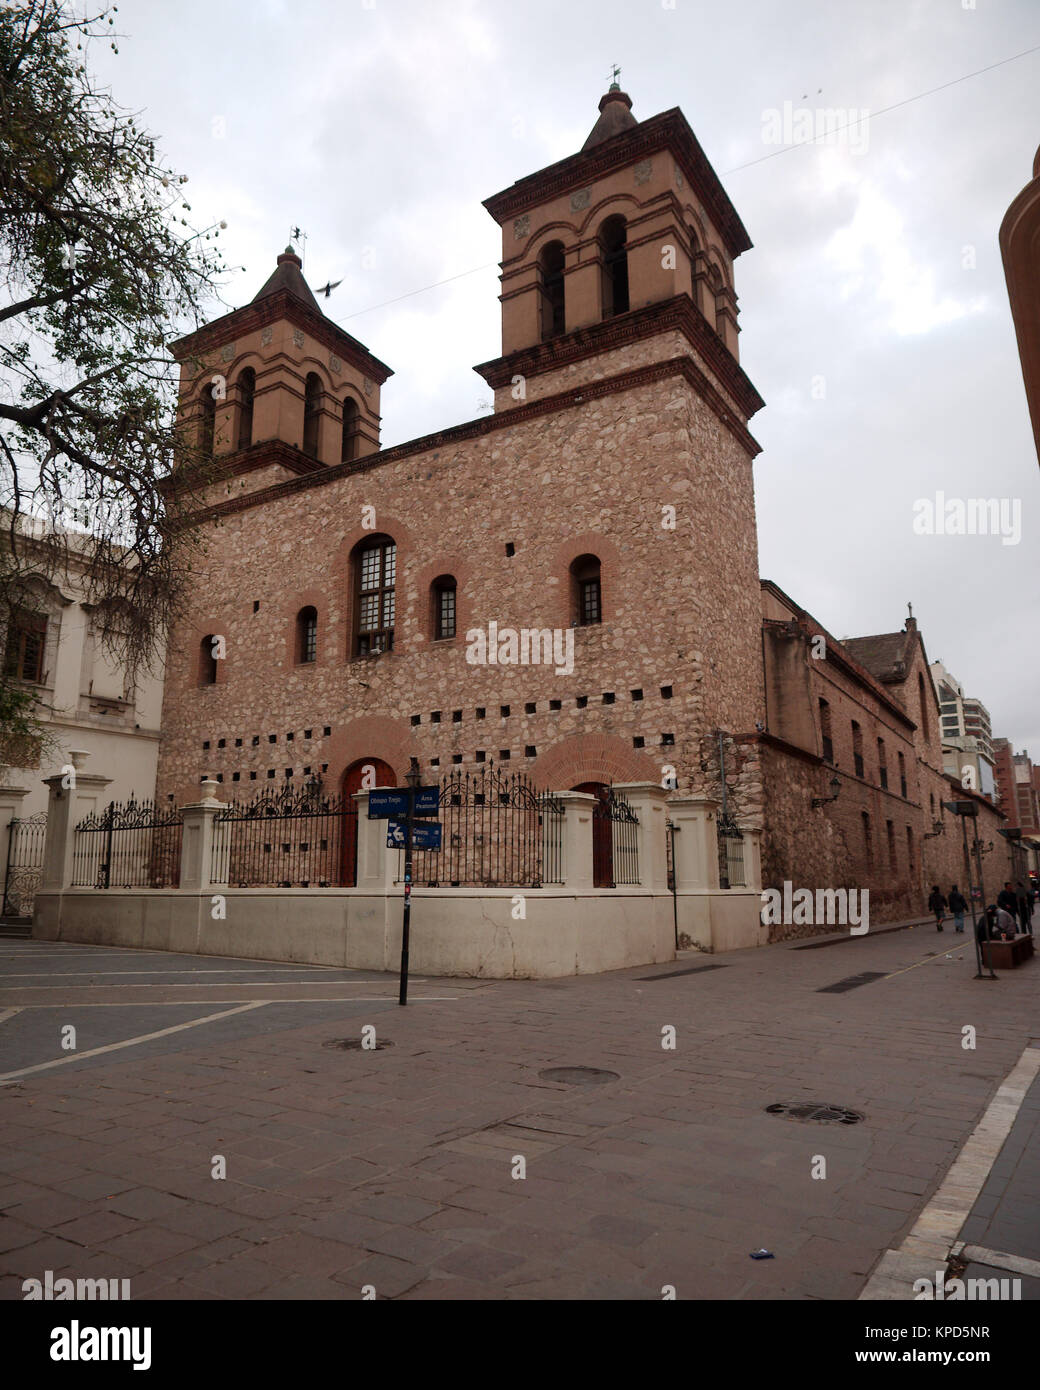 Córdoba, Argentina - 2017: La Sociedad de Jesús, la Iglesia se encuentra en la Manzana Jesuitica (jesuita bloque), Patrimonio de la UNESCO. Foto de stock